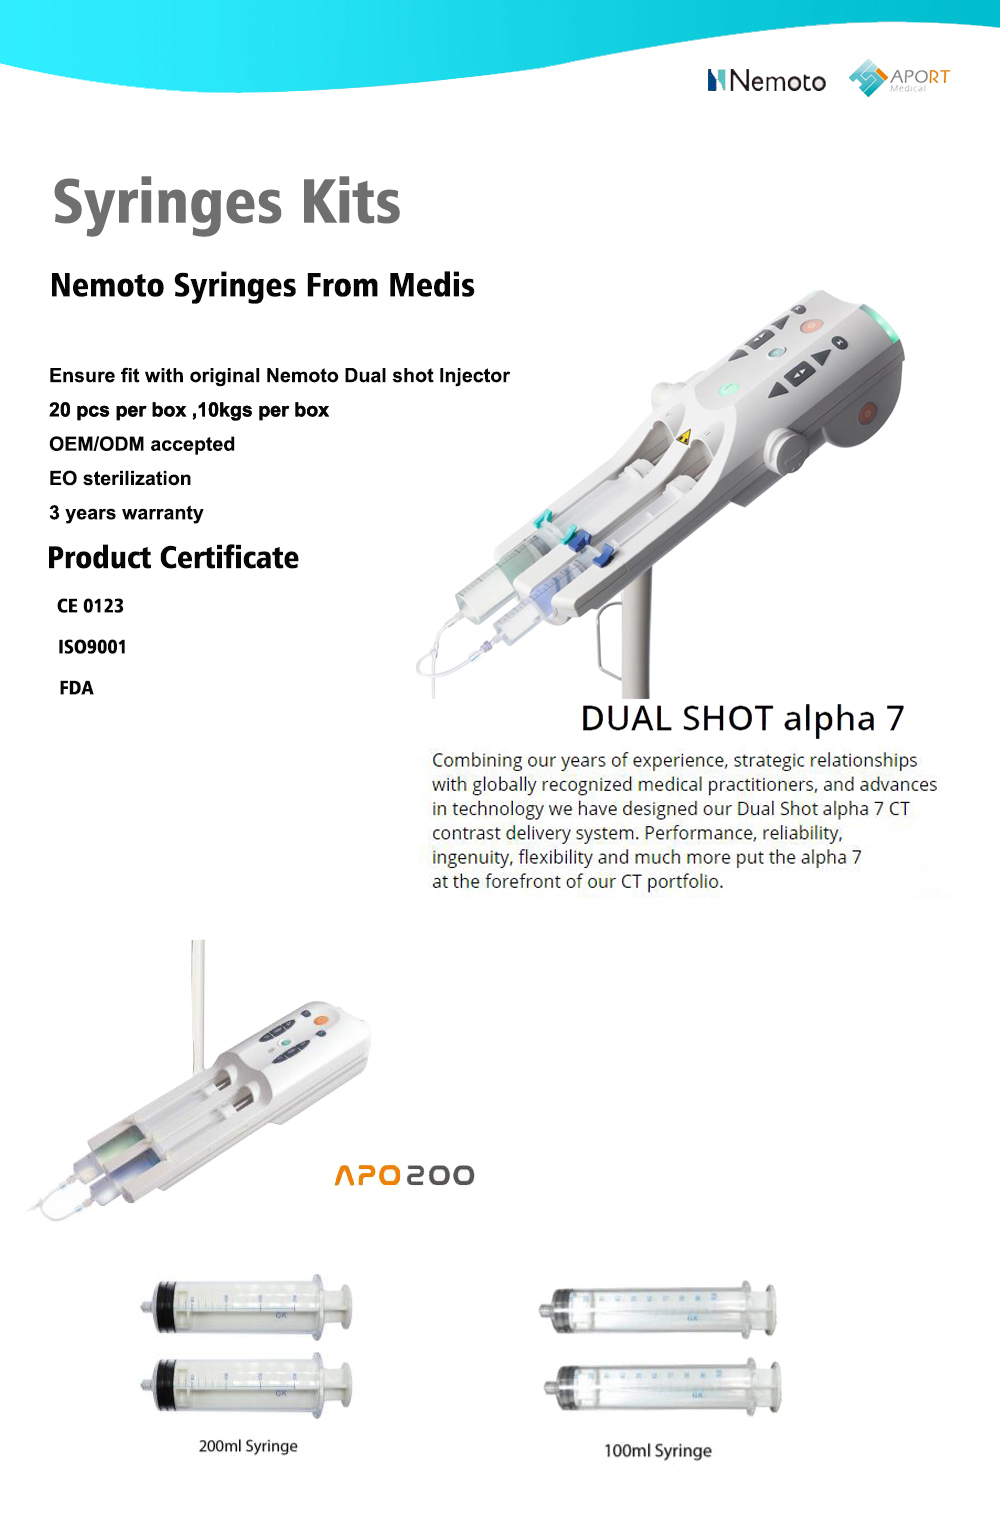 contrast syringes-contrast injector syringes-nemoto injector syringes